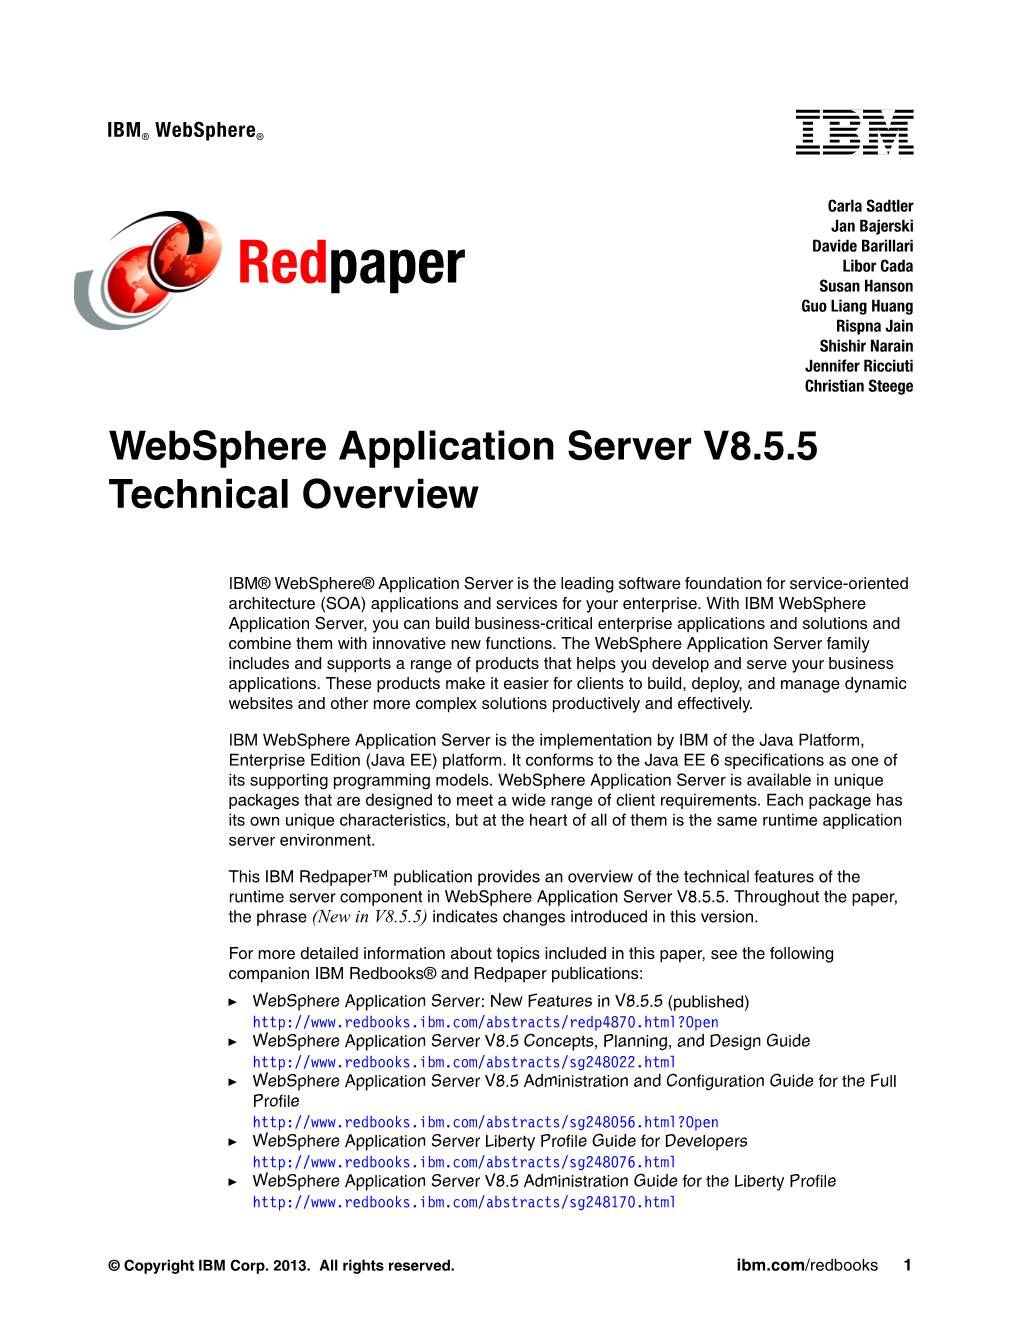 Websphere Application Server V8.5.5 Technical Overview